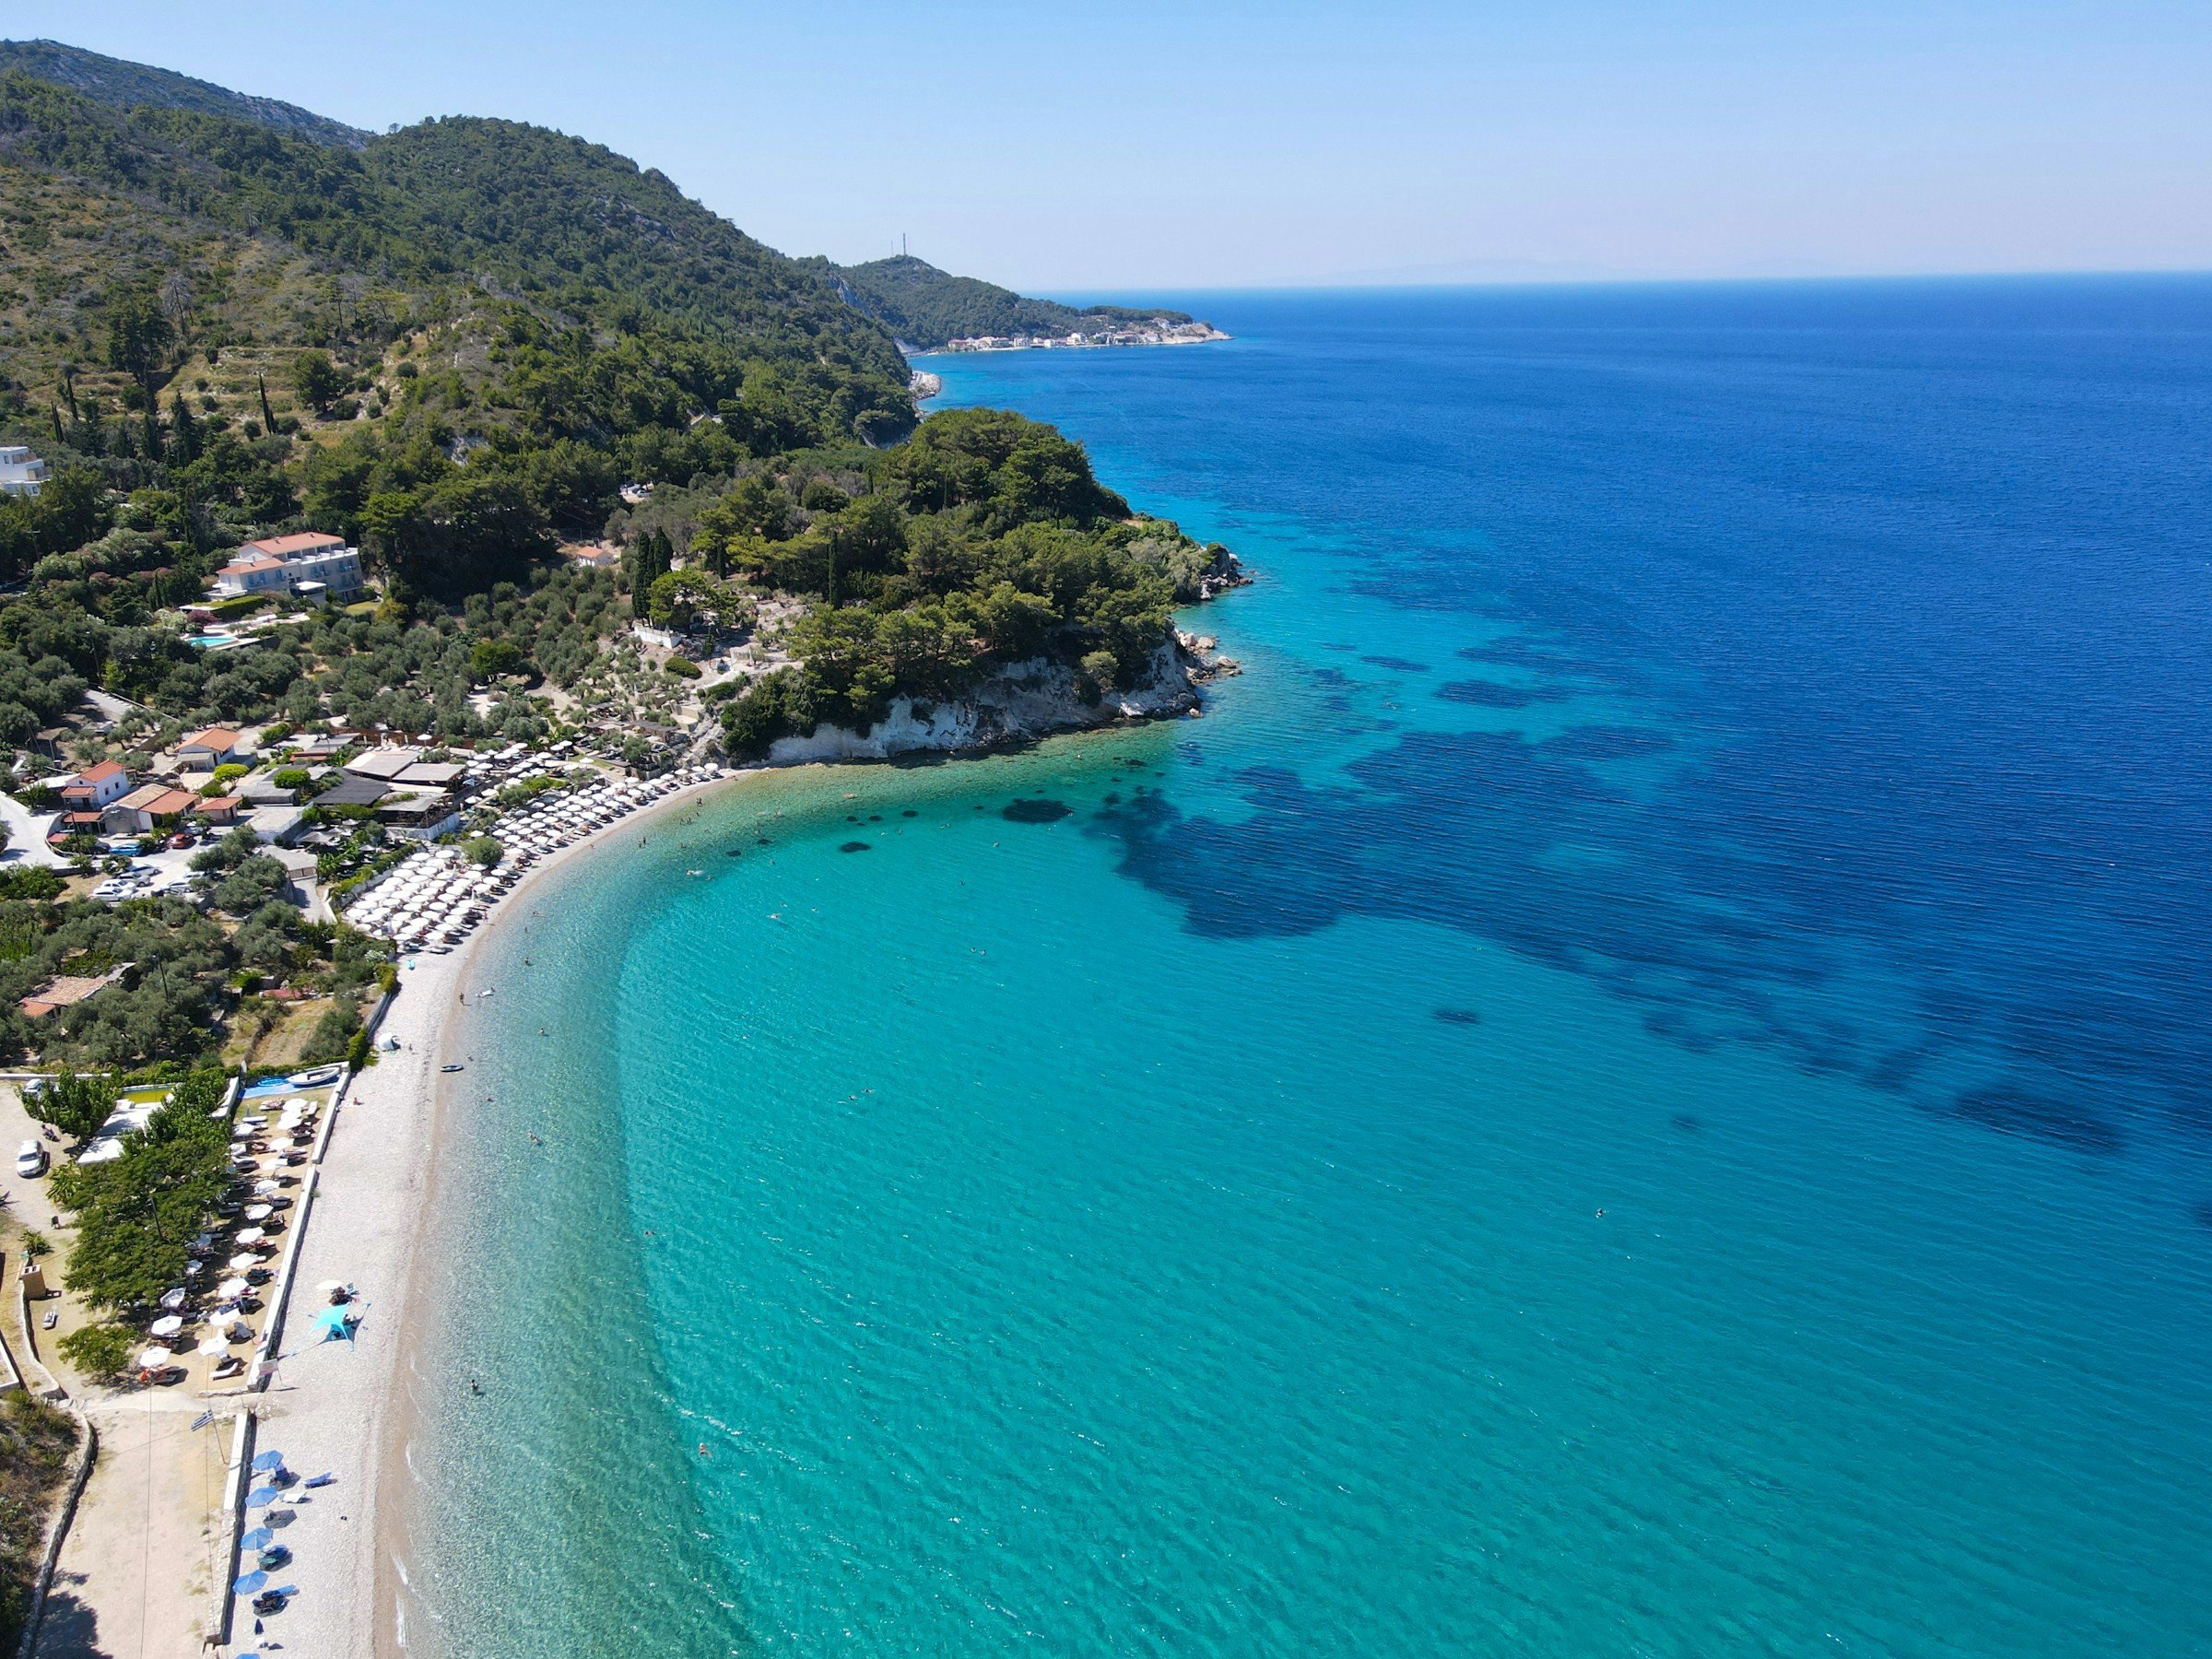 Blue sea at a remote beach on the island of Samos